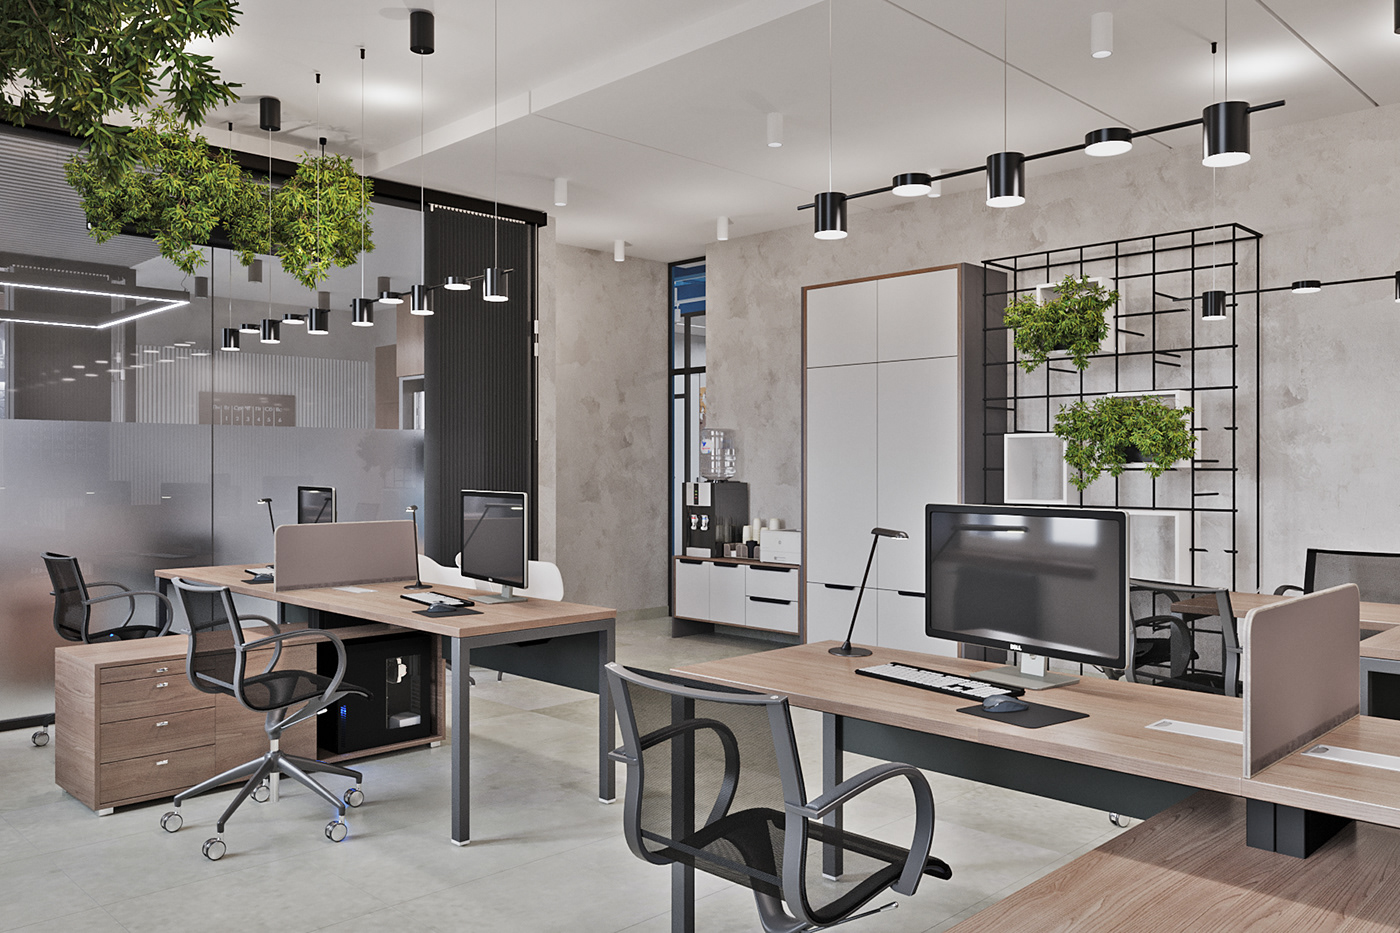 3ds max architecture design Interior Office Project visualization визуализация дизайн интерьера офис